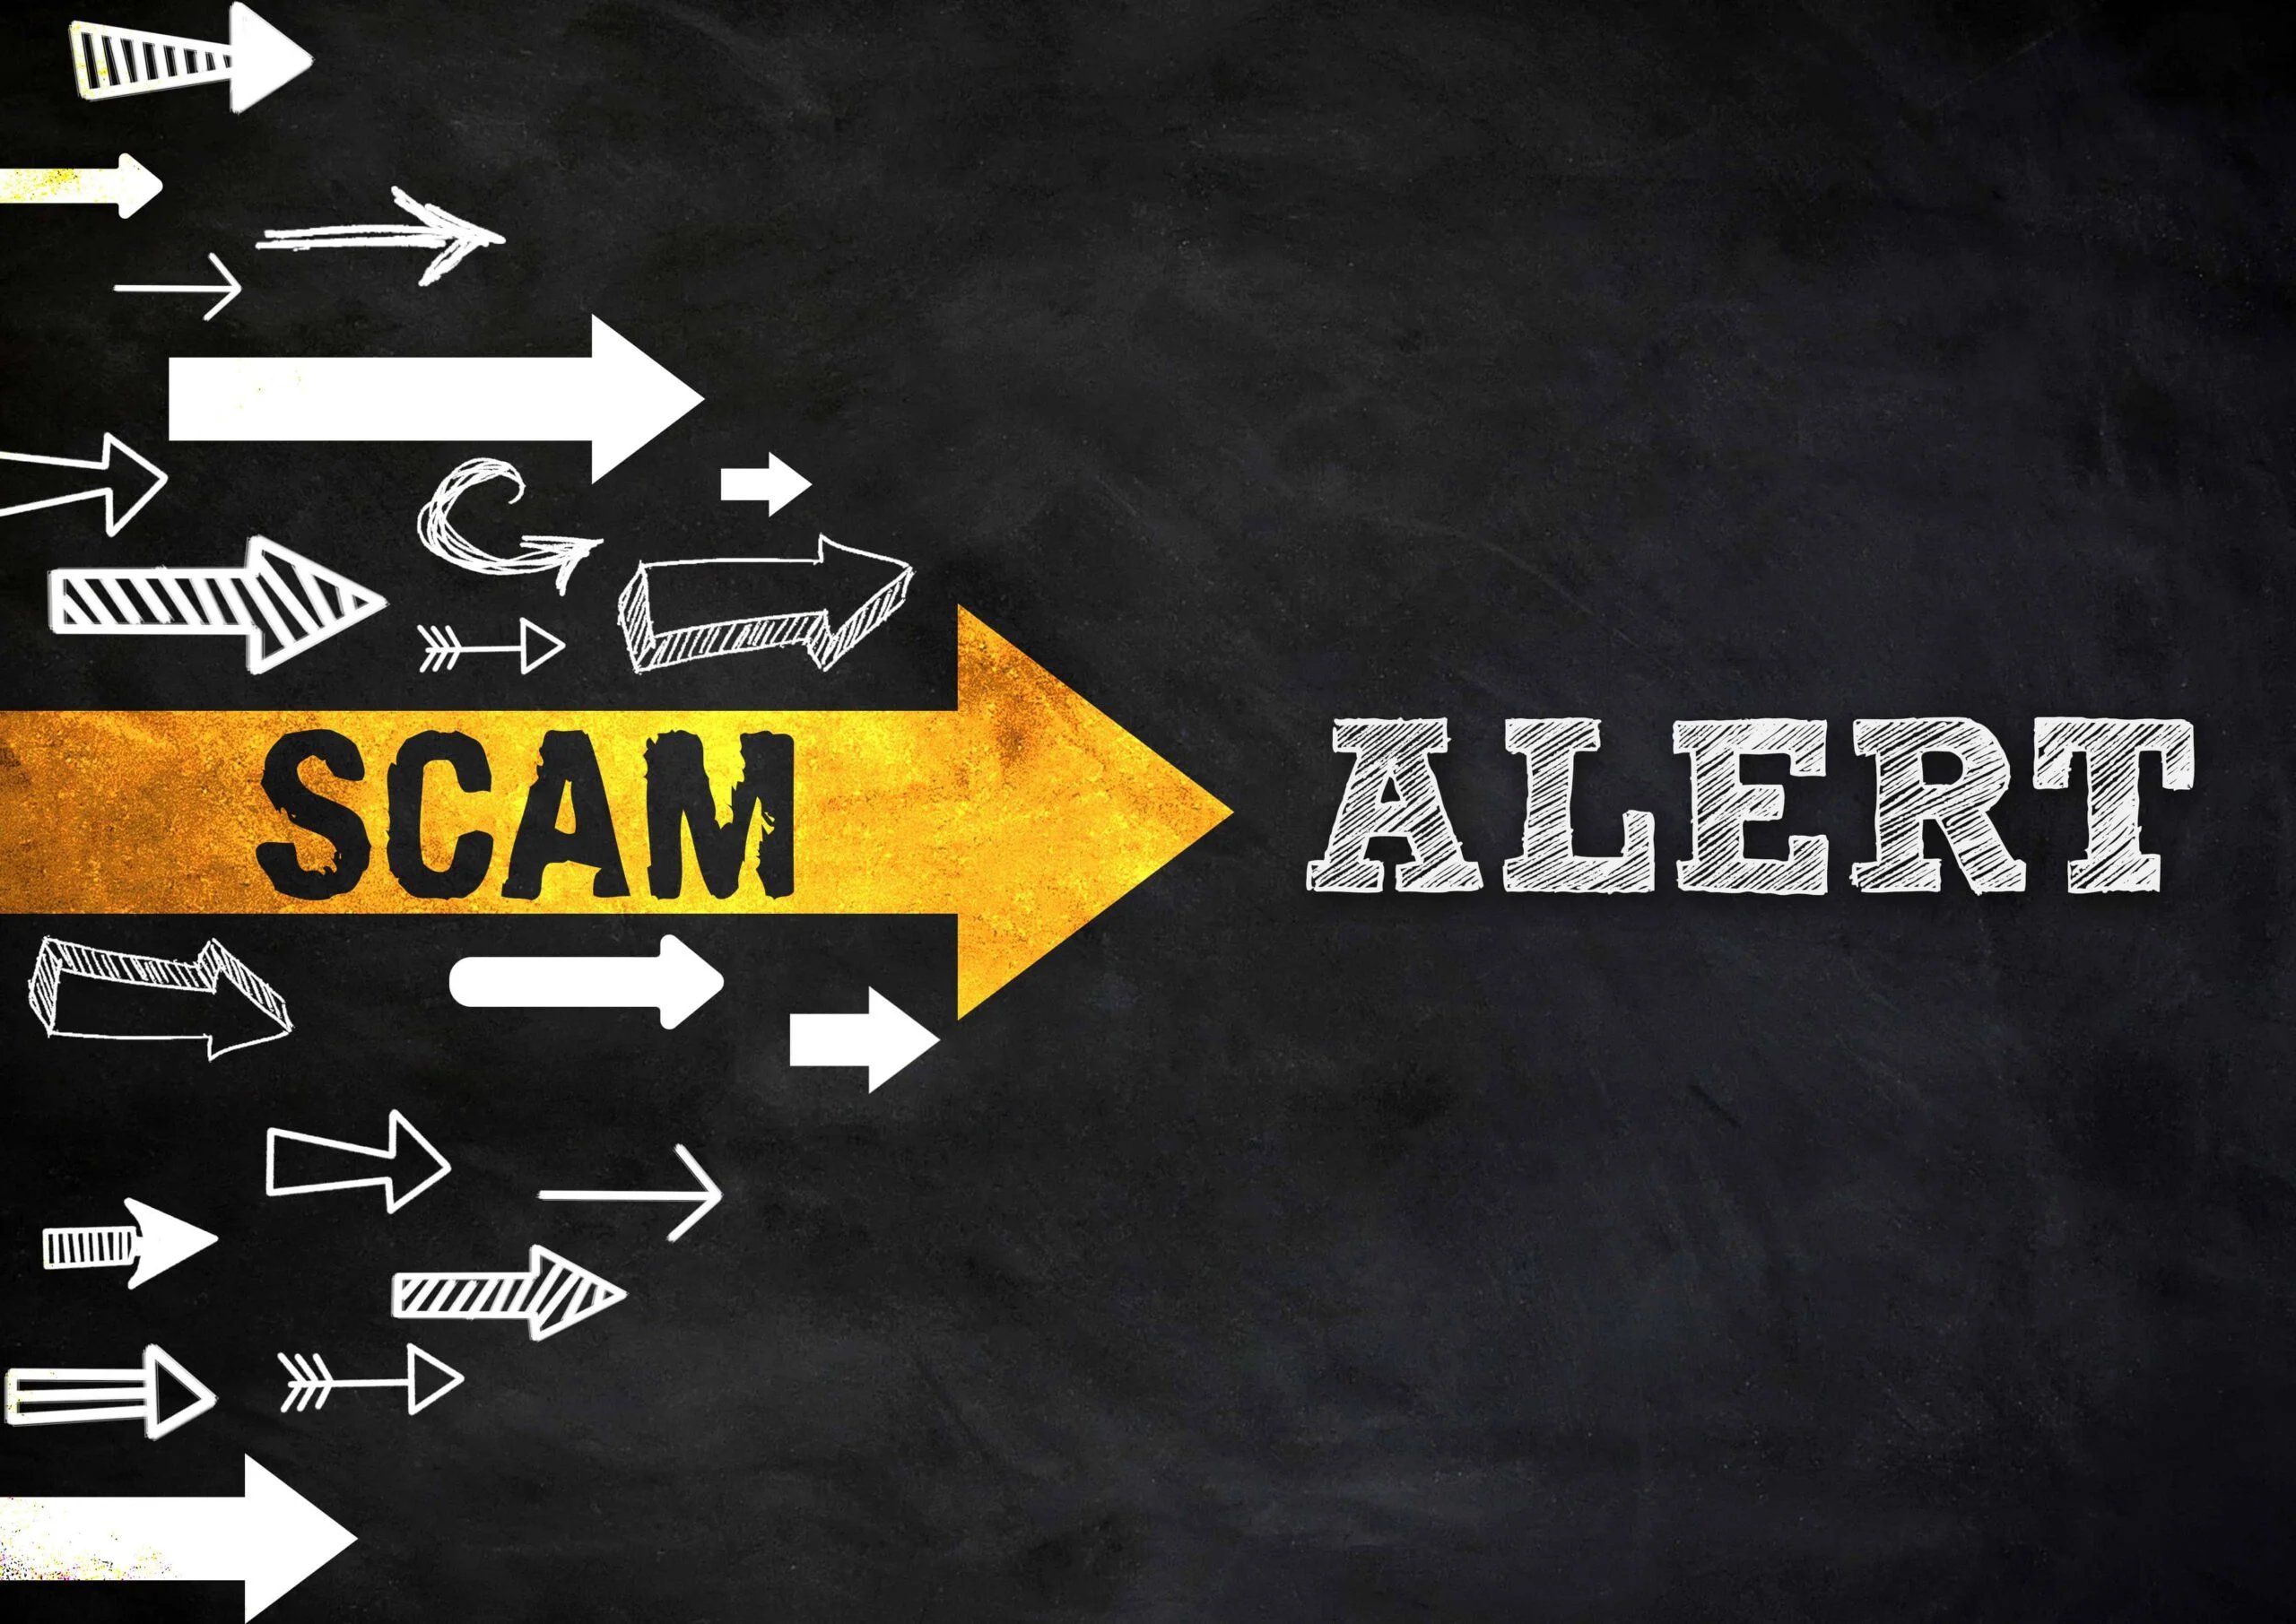 markets-giant-scam-false-trust, scam alert, scam, website, Scam Websites Alert - November 2023, November, Scam Alert